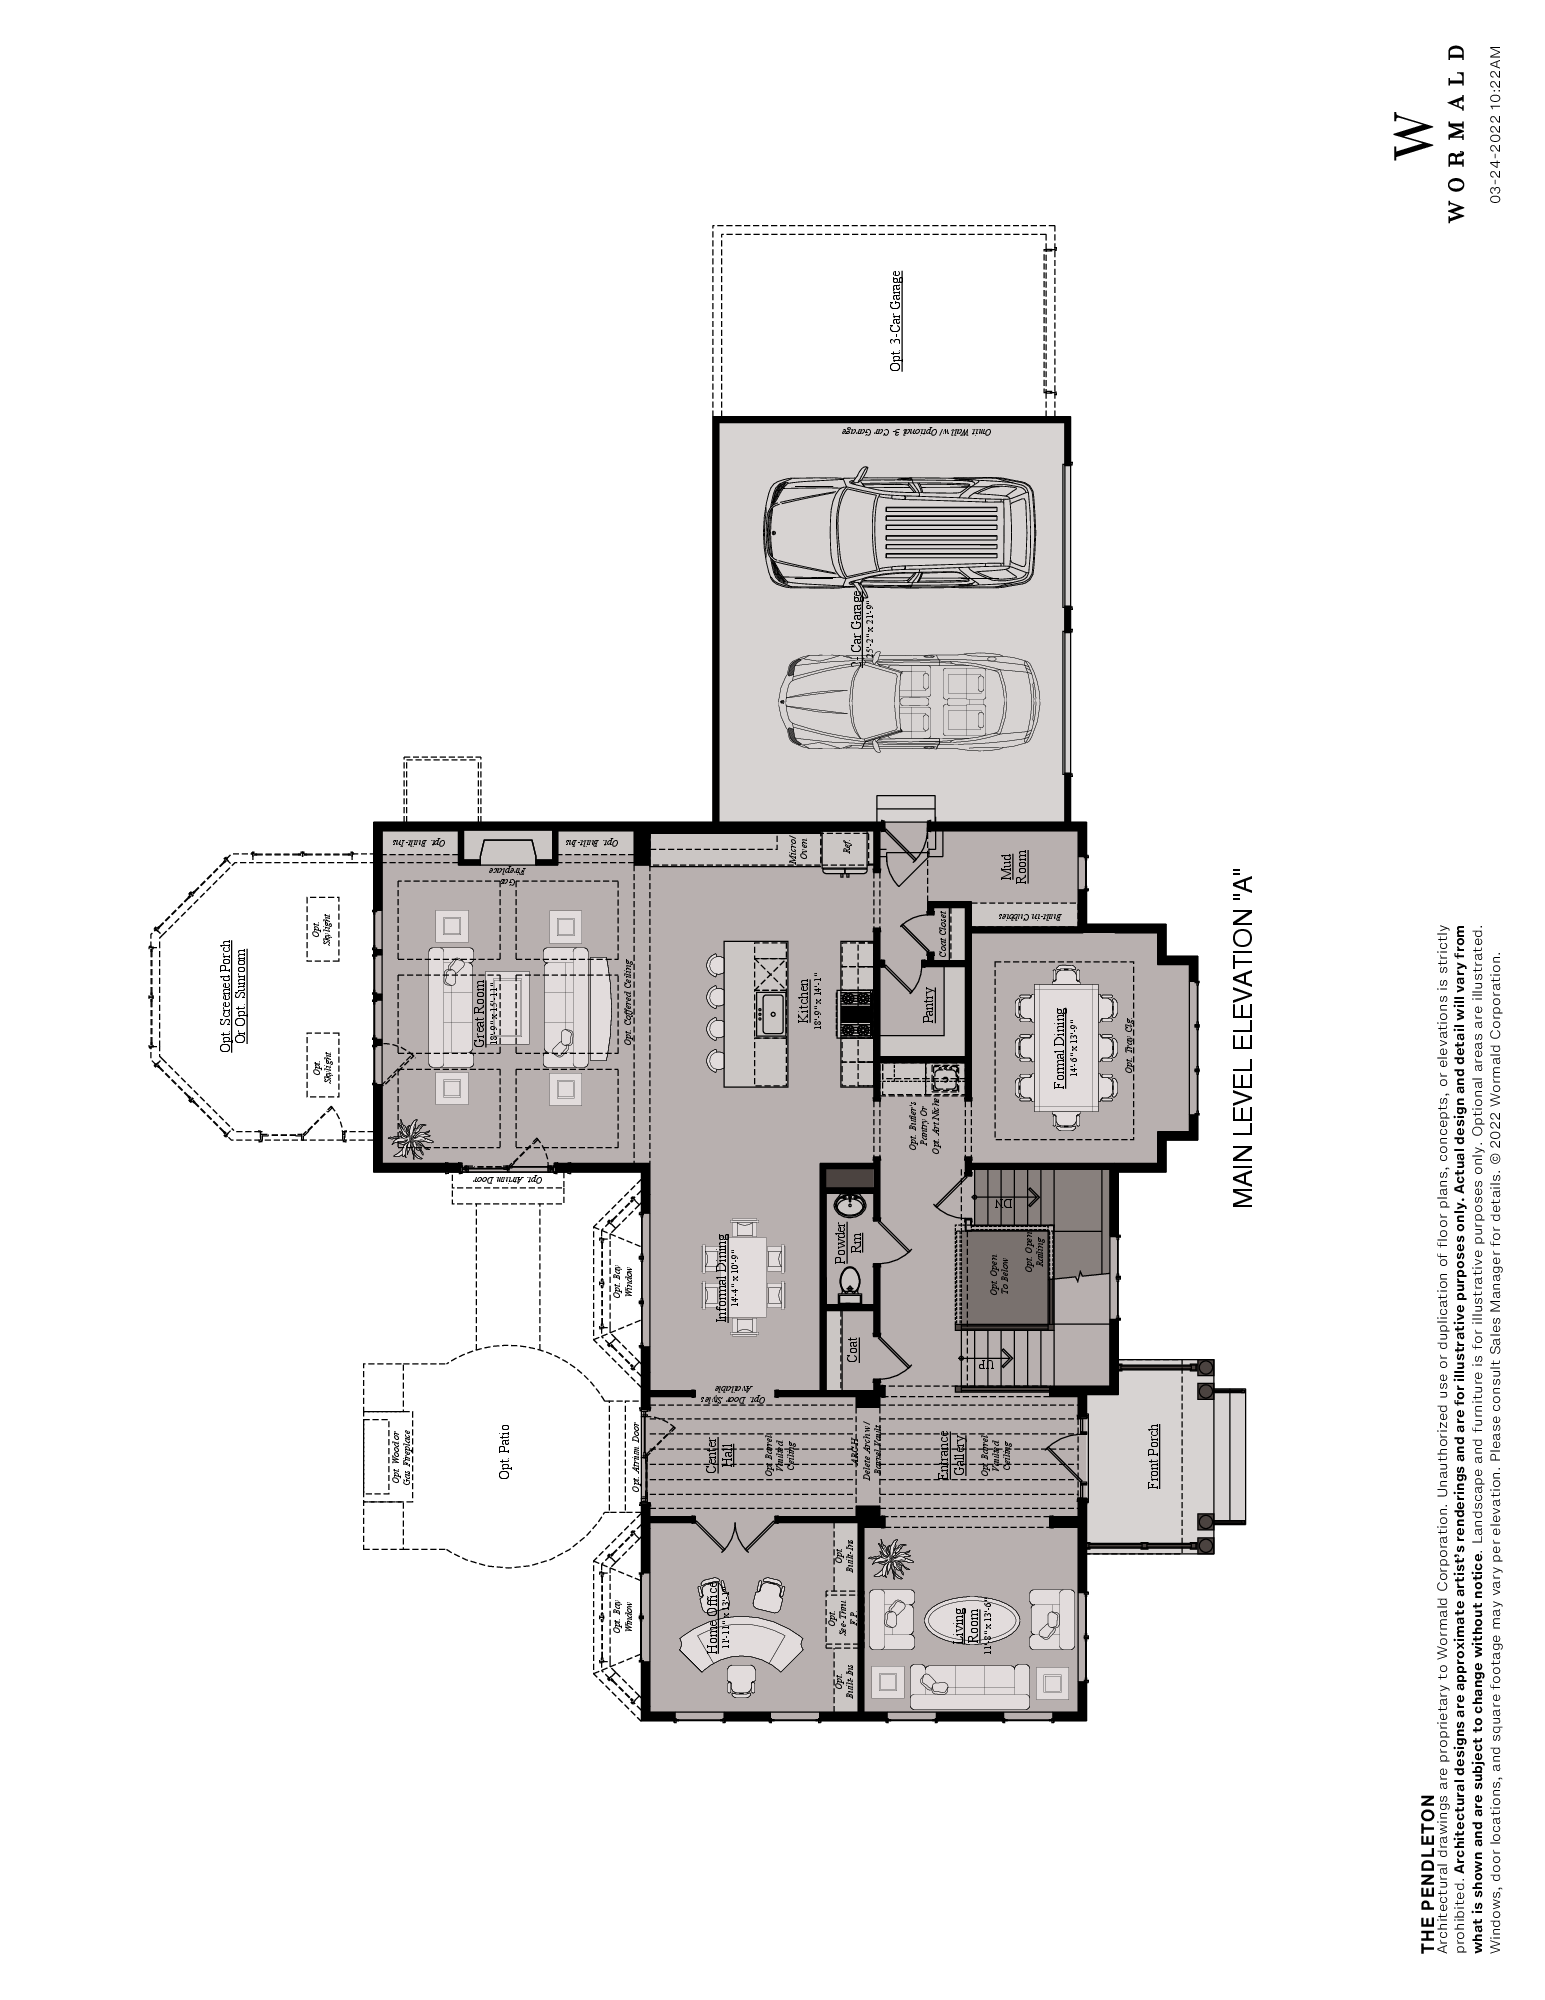 The Pendleton floor plan 0